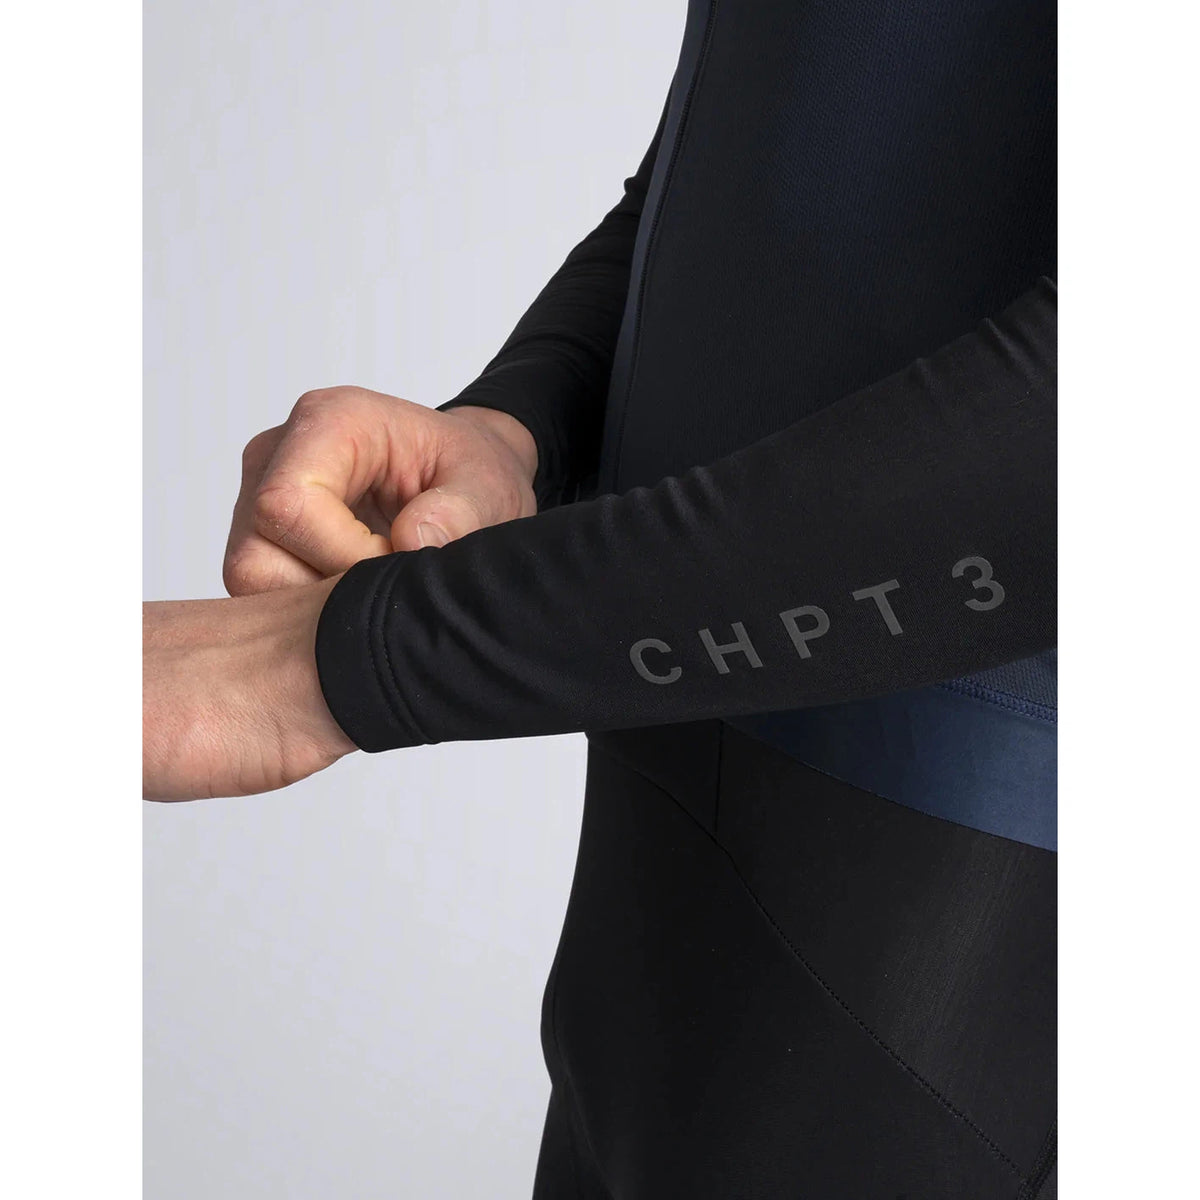 CHPT3 Cold Days Arm Warmer